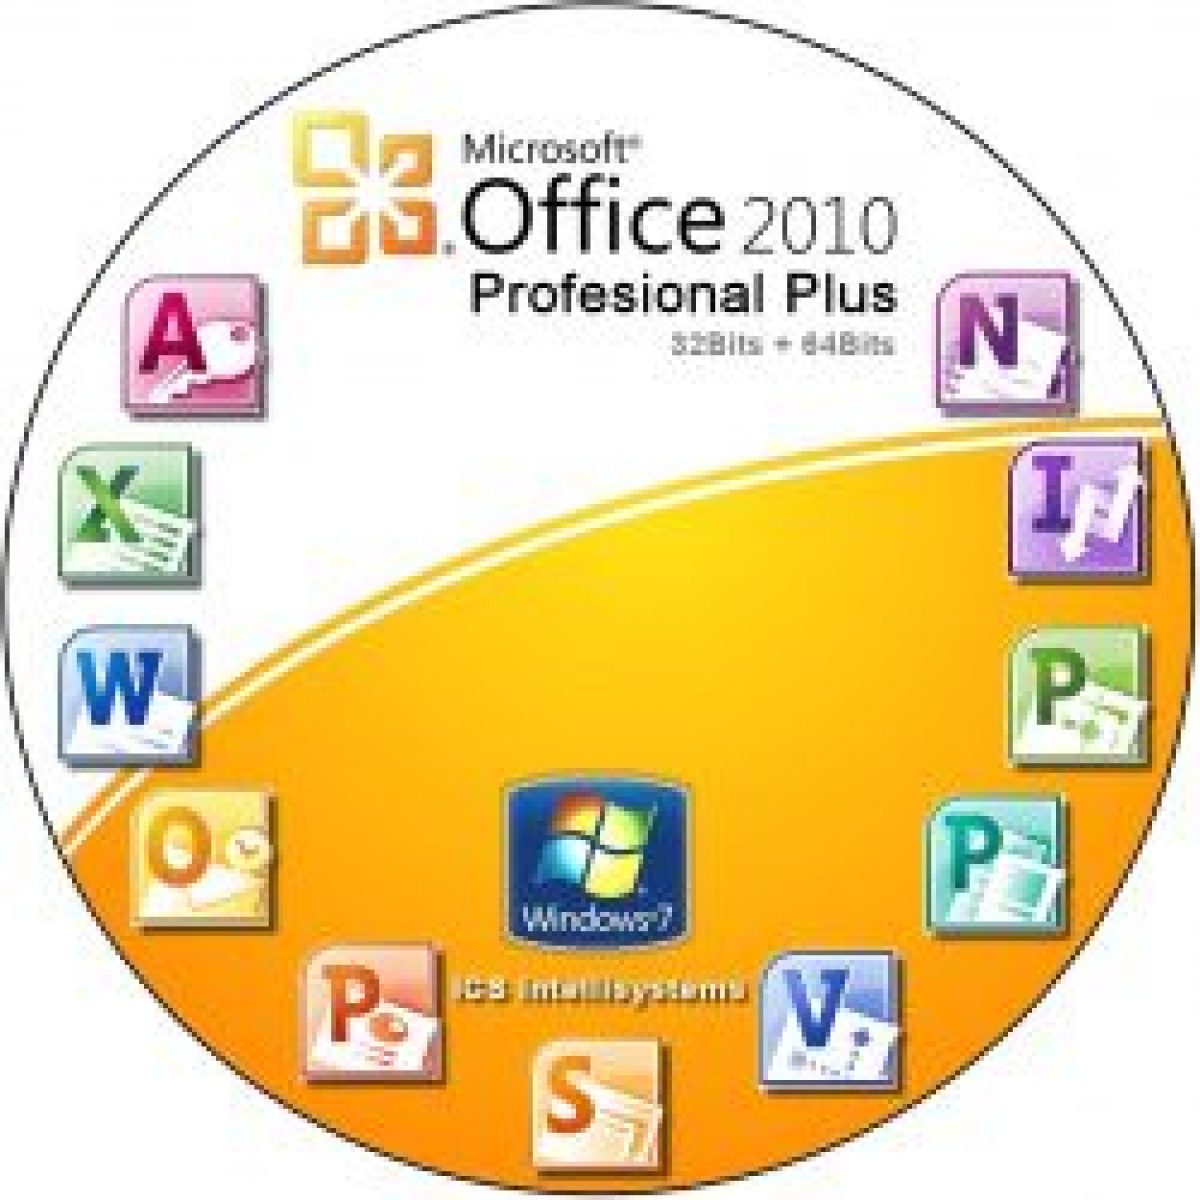 microsoft office word starter free download 2010